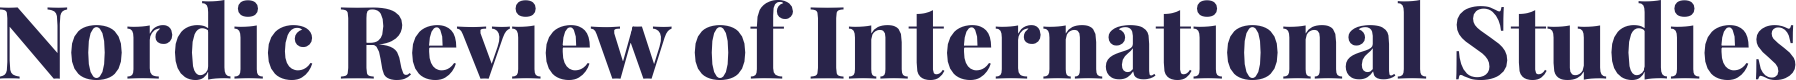 Logo Nordic Review of International Studies